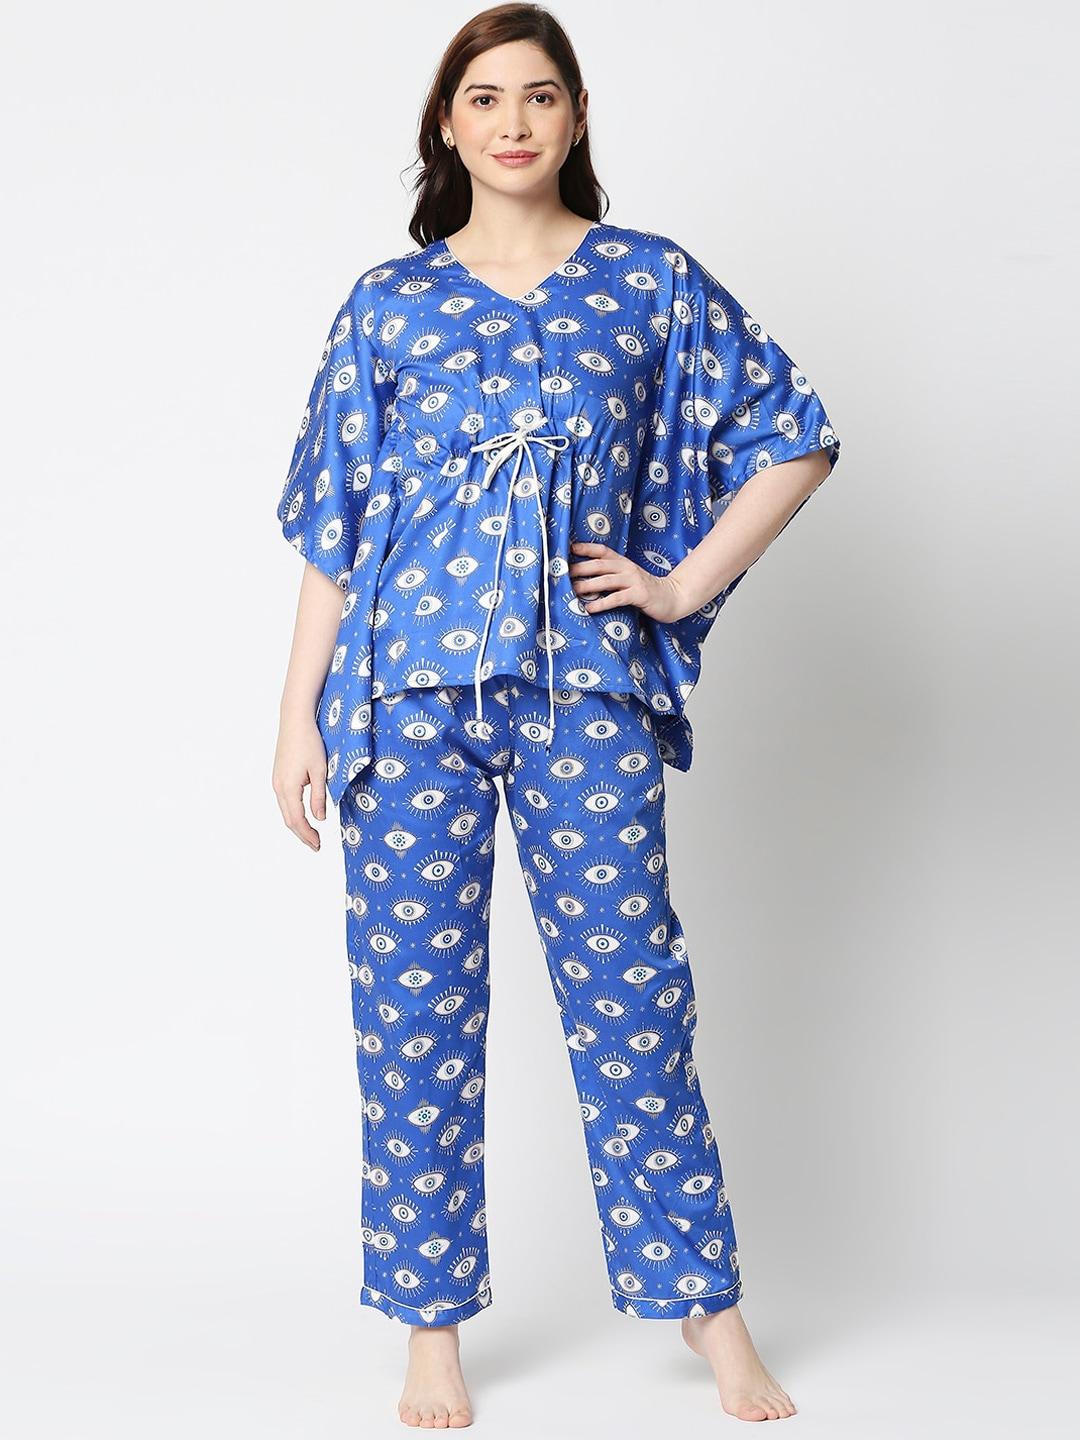 Pyjama Party Women Blue & White Printed Cotton Night suit